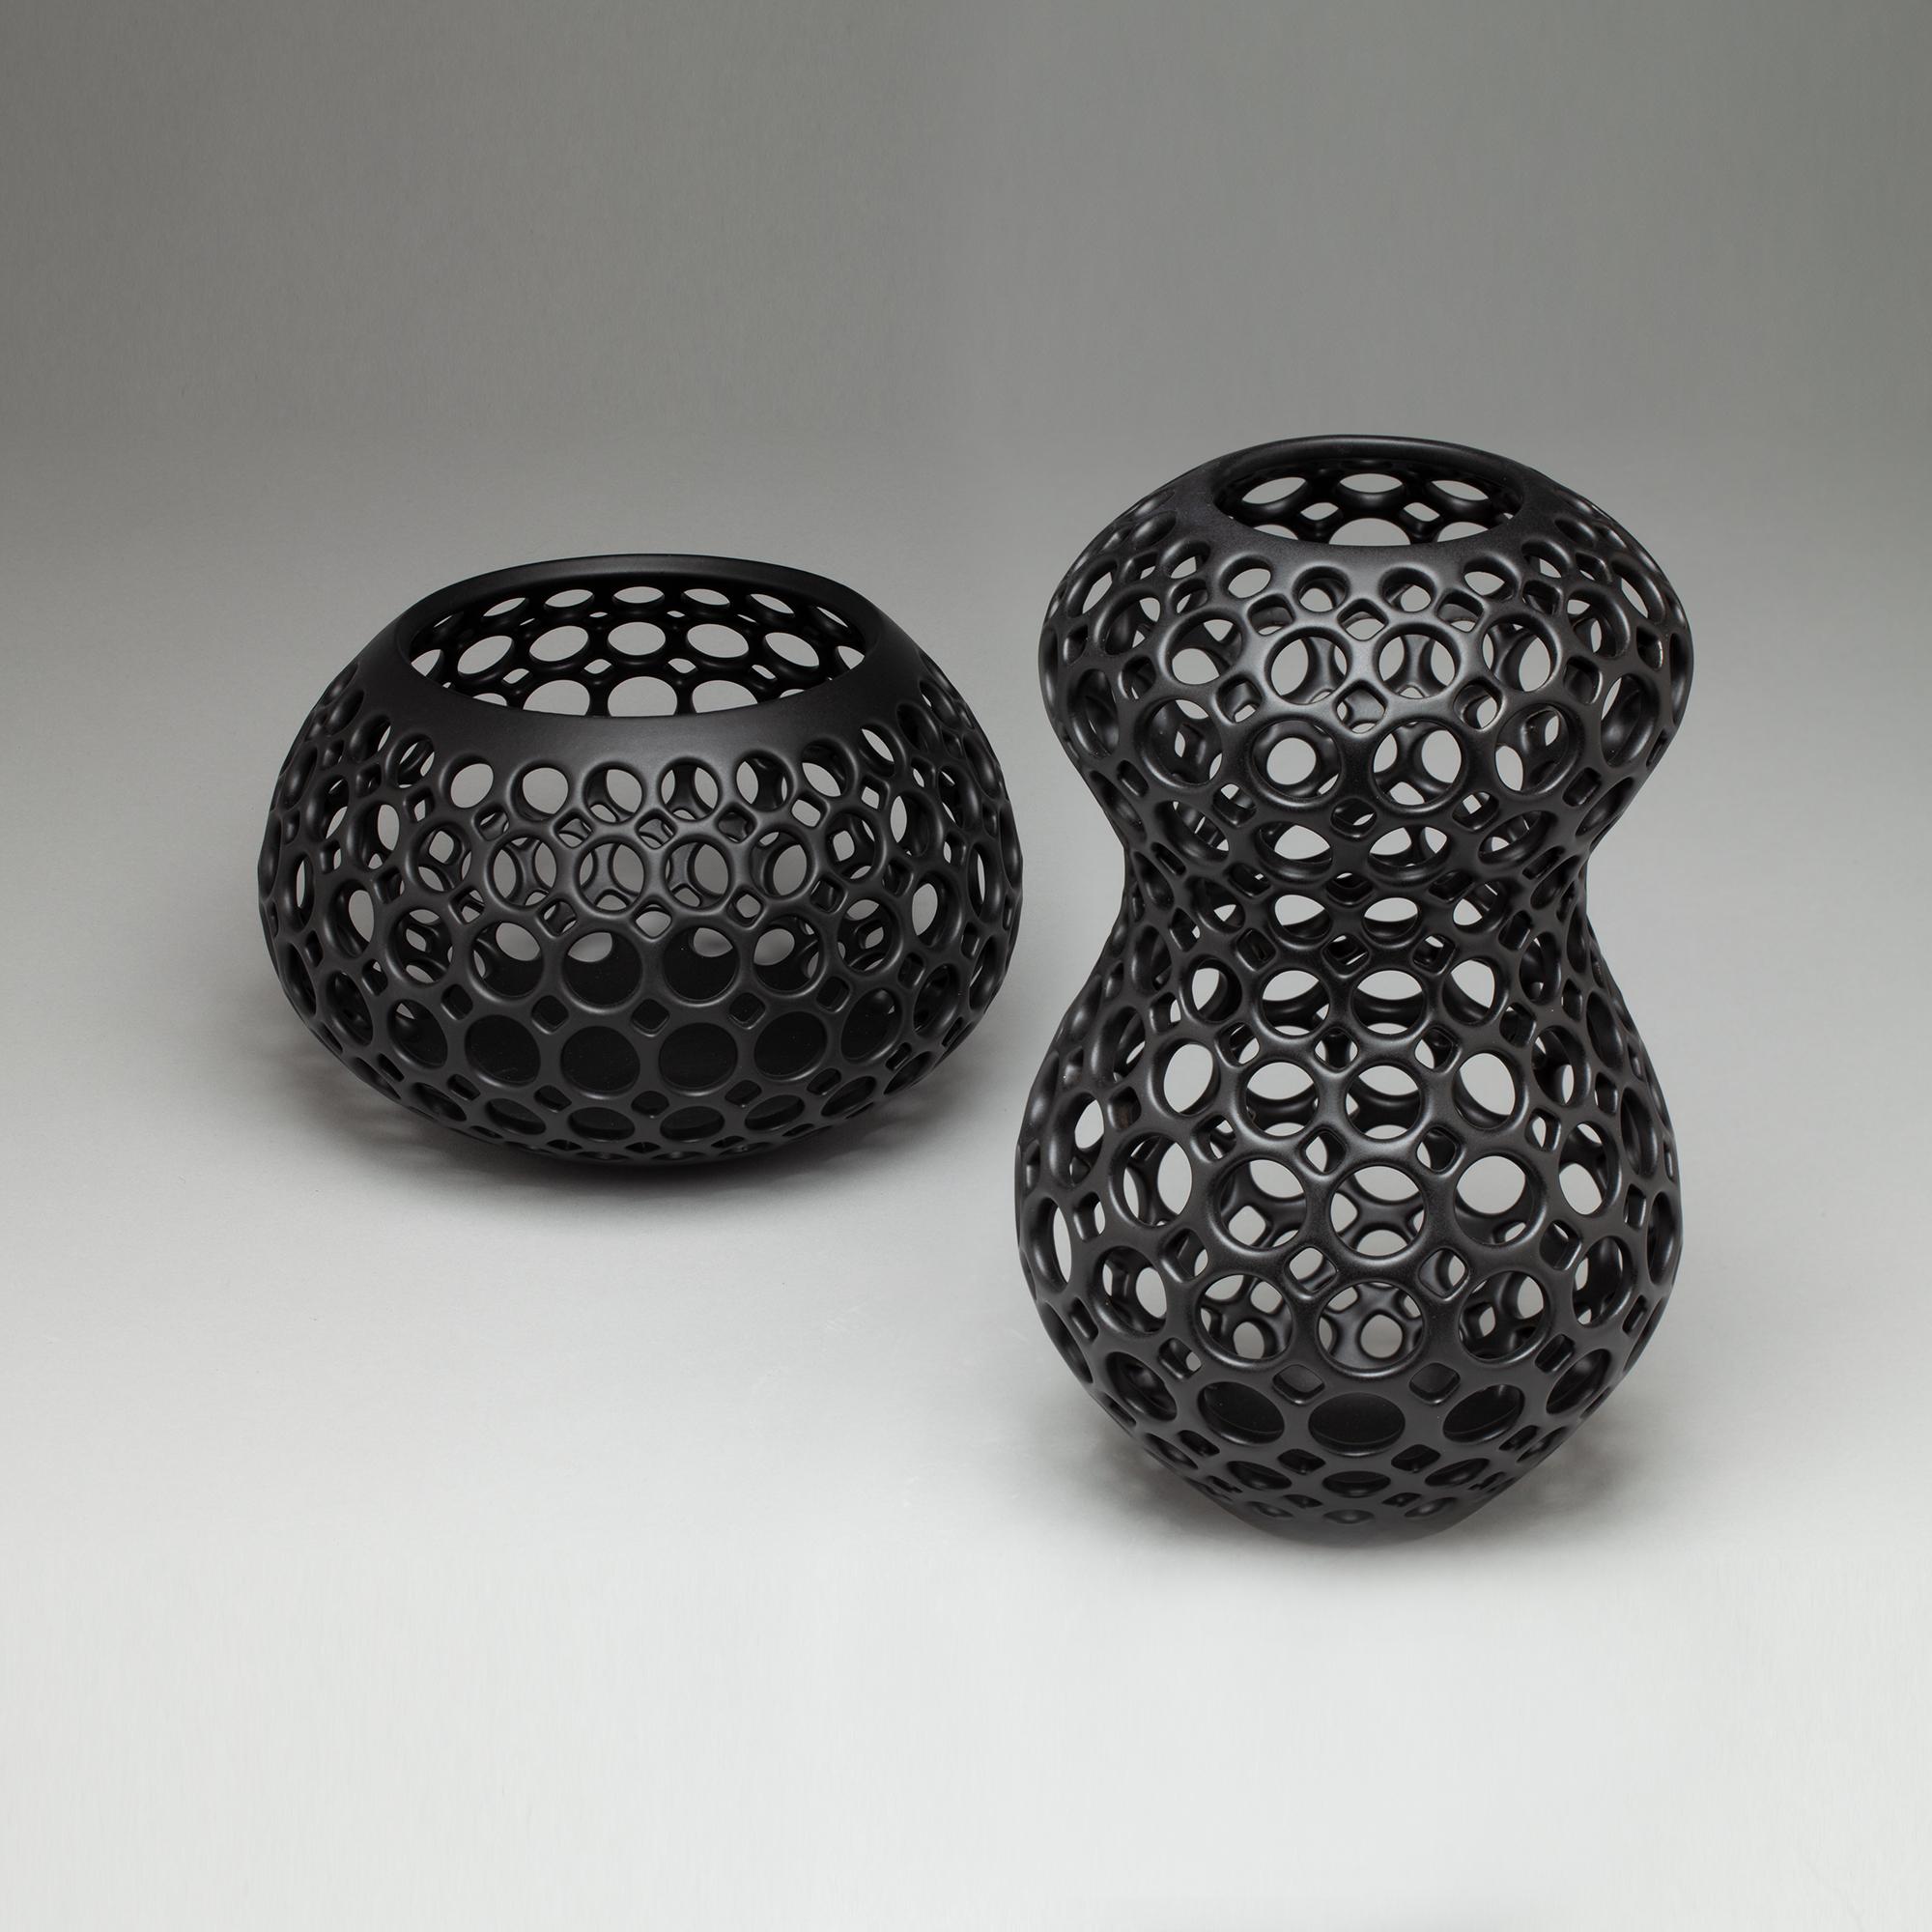 American Pierced Ceramic Black Sculpture/Vessel-Yvette For Sale